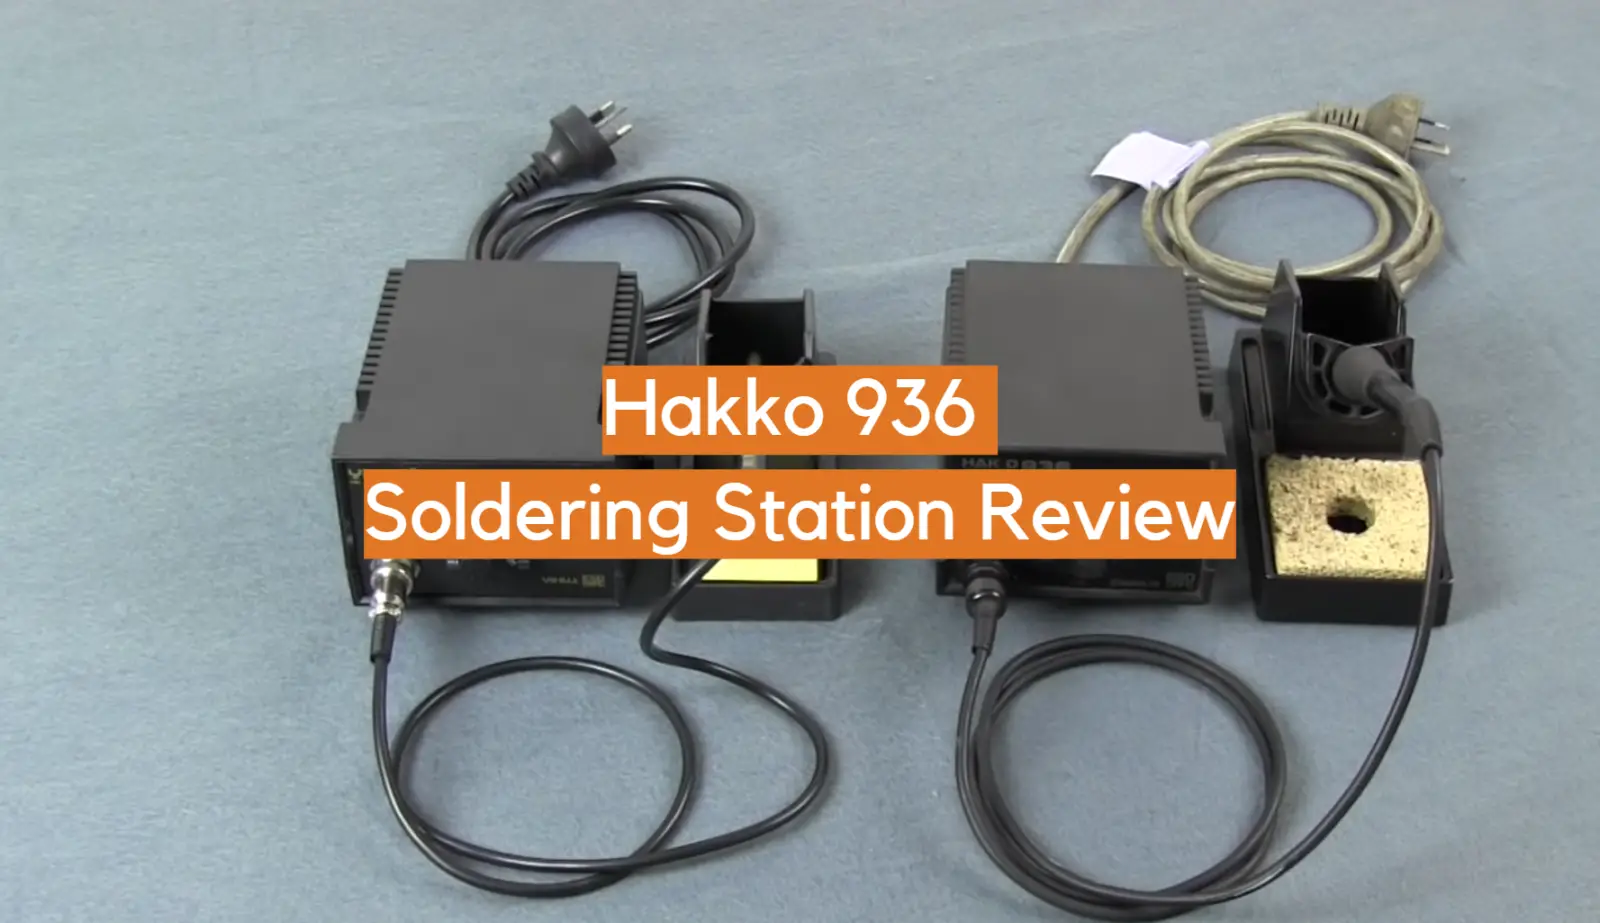 Hakko 936 Soldering Station Review